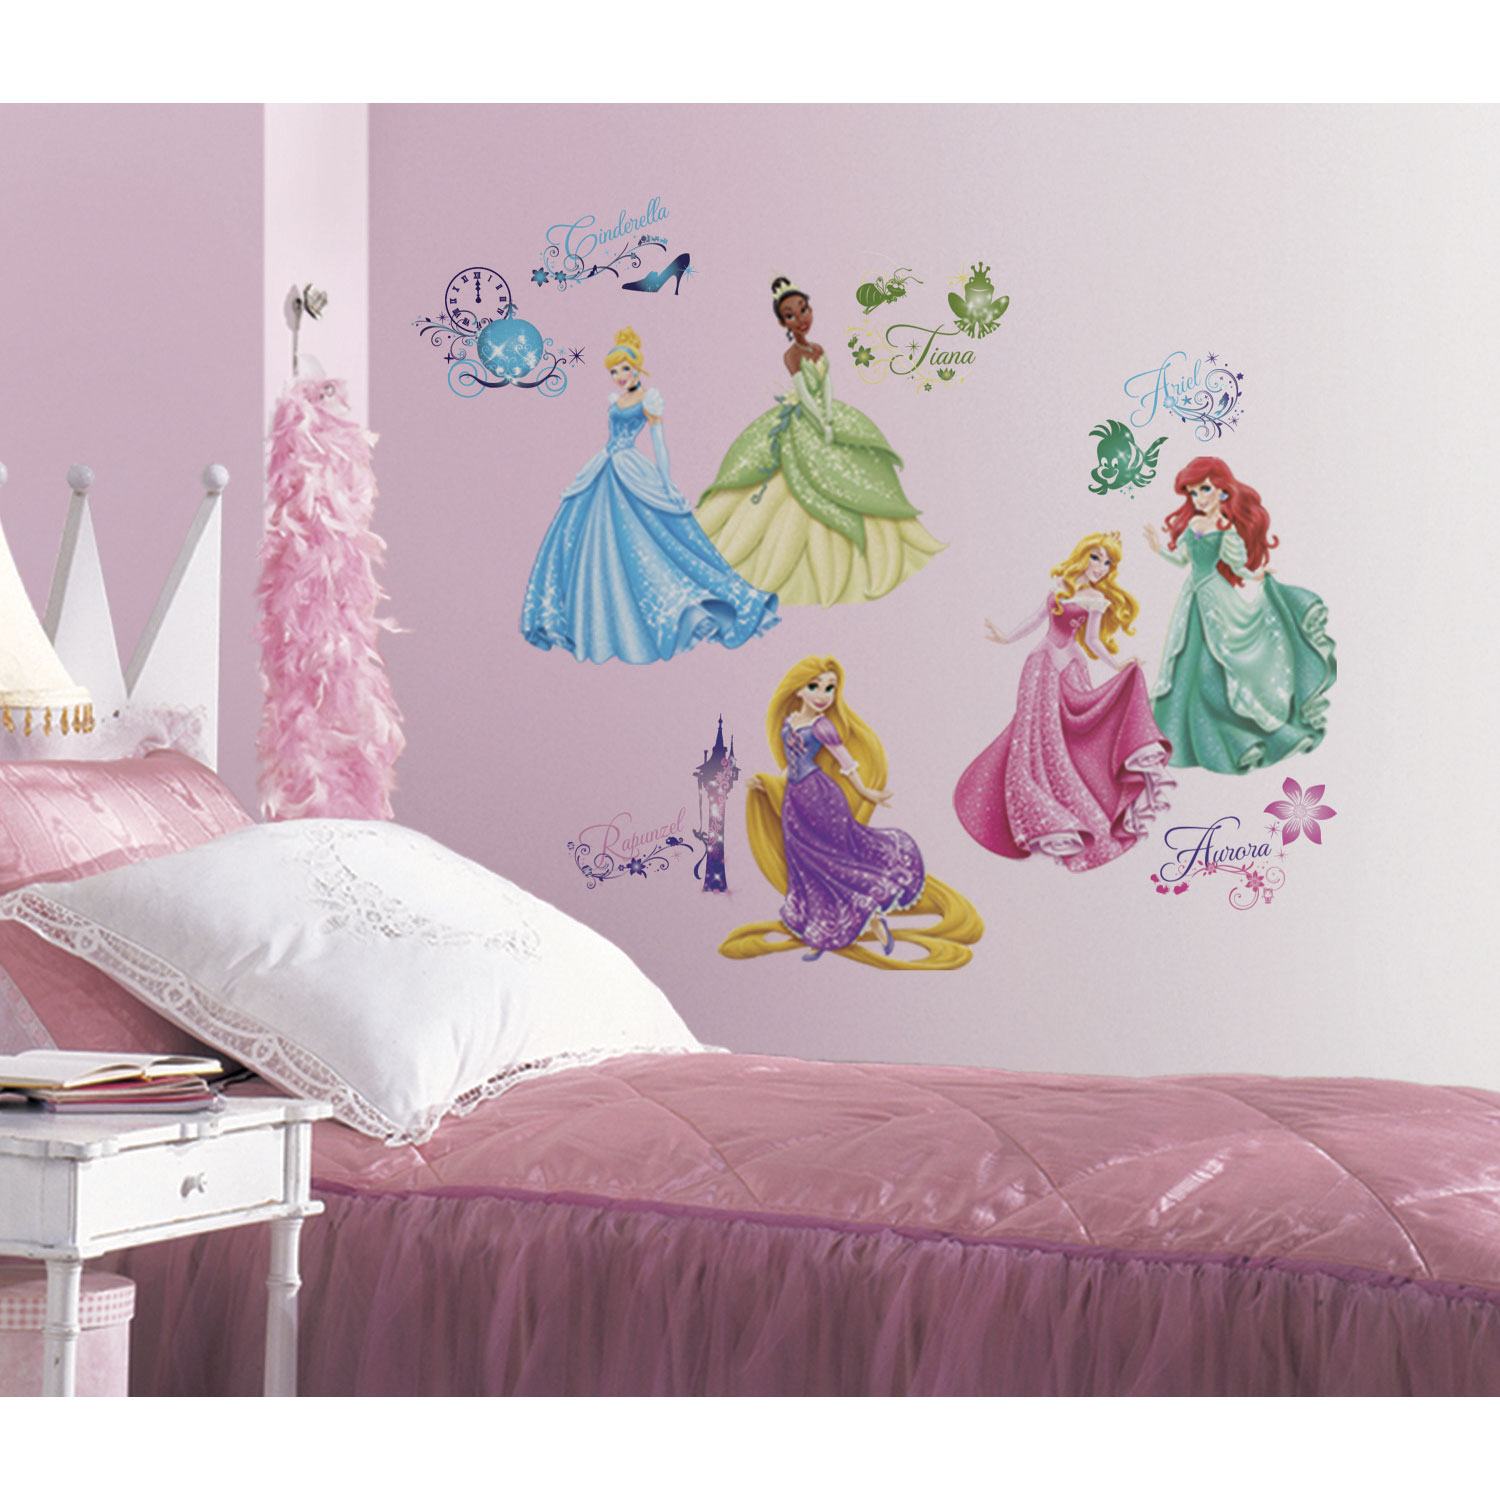 RoomMates Disney Princess Royal Debut Peel and Stick Wall Decals - Pink/Blue/Green